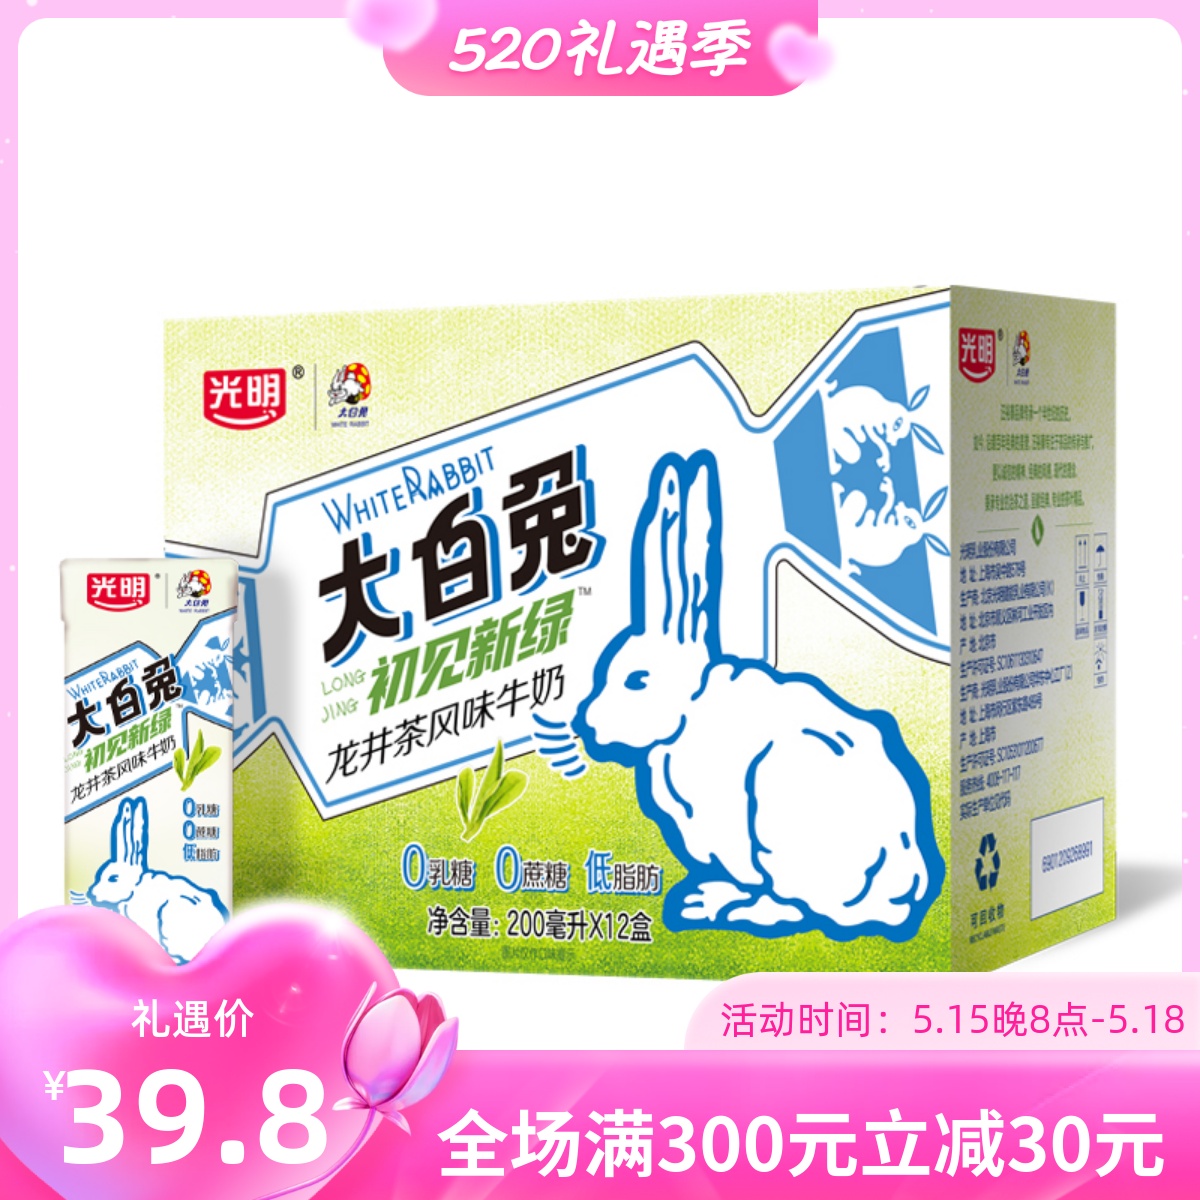 Bright 光明 大白兔龙井茶风味牛奶200ml